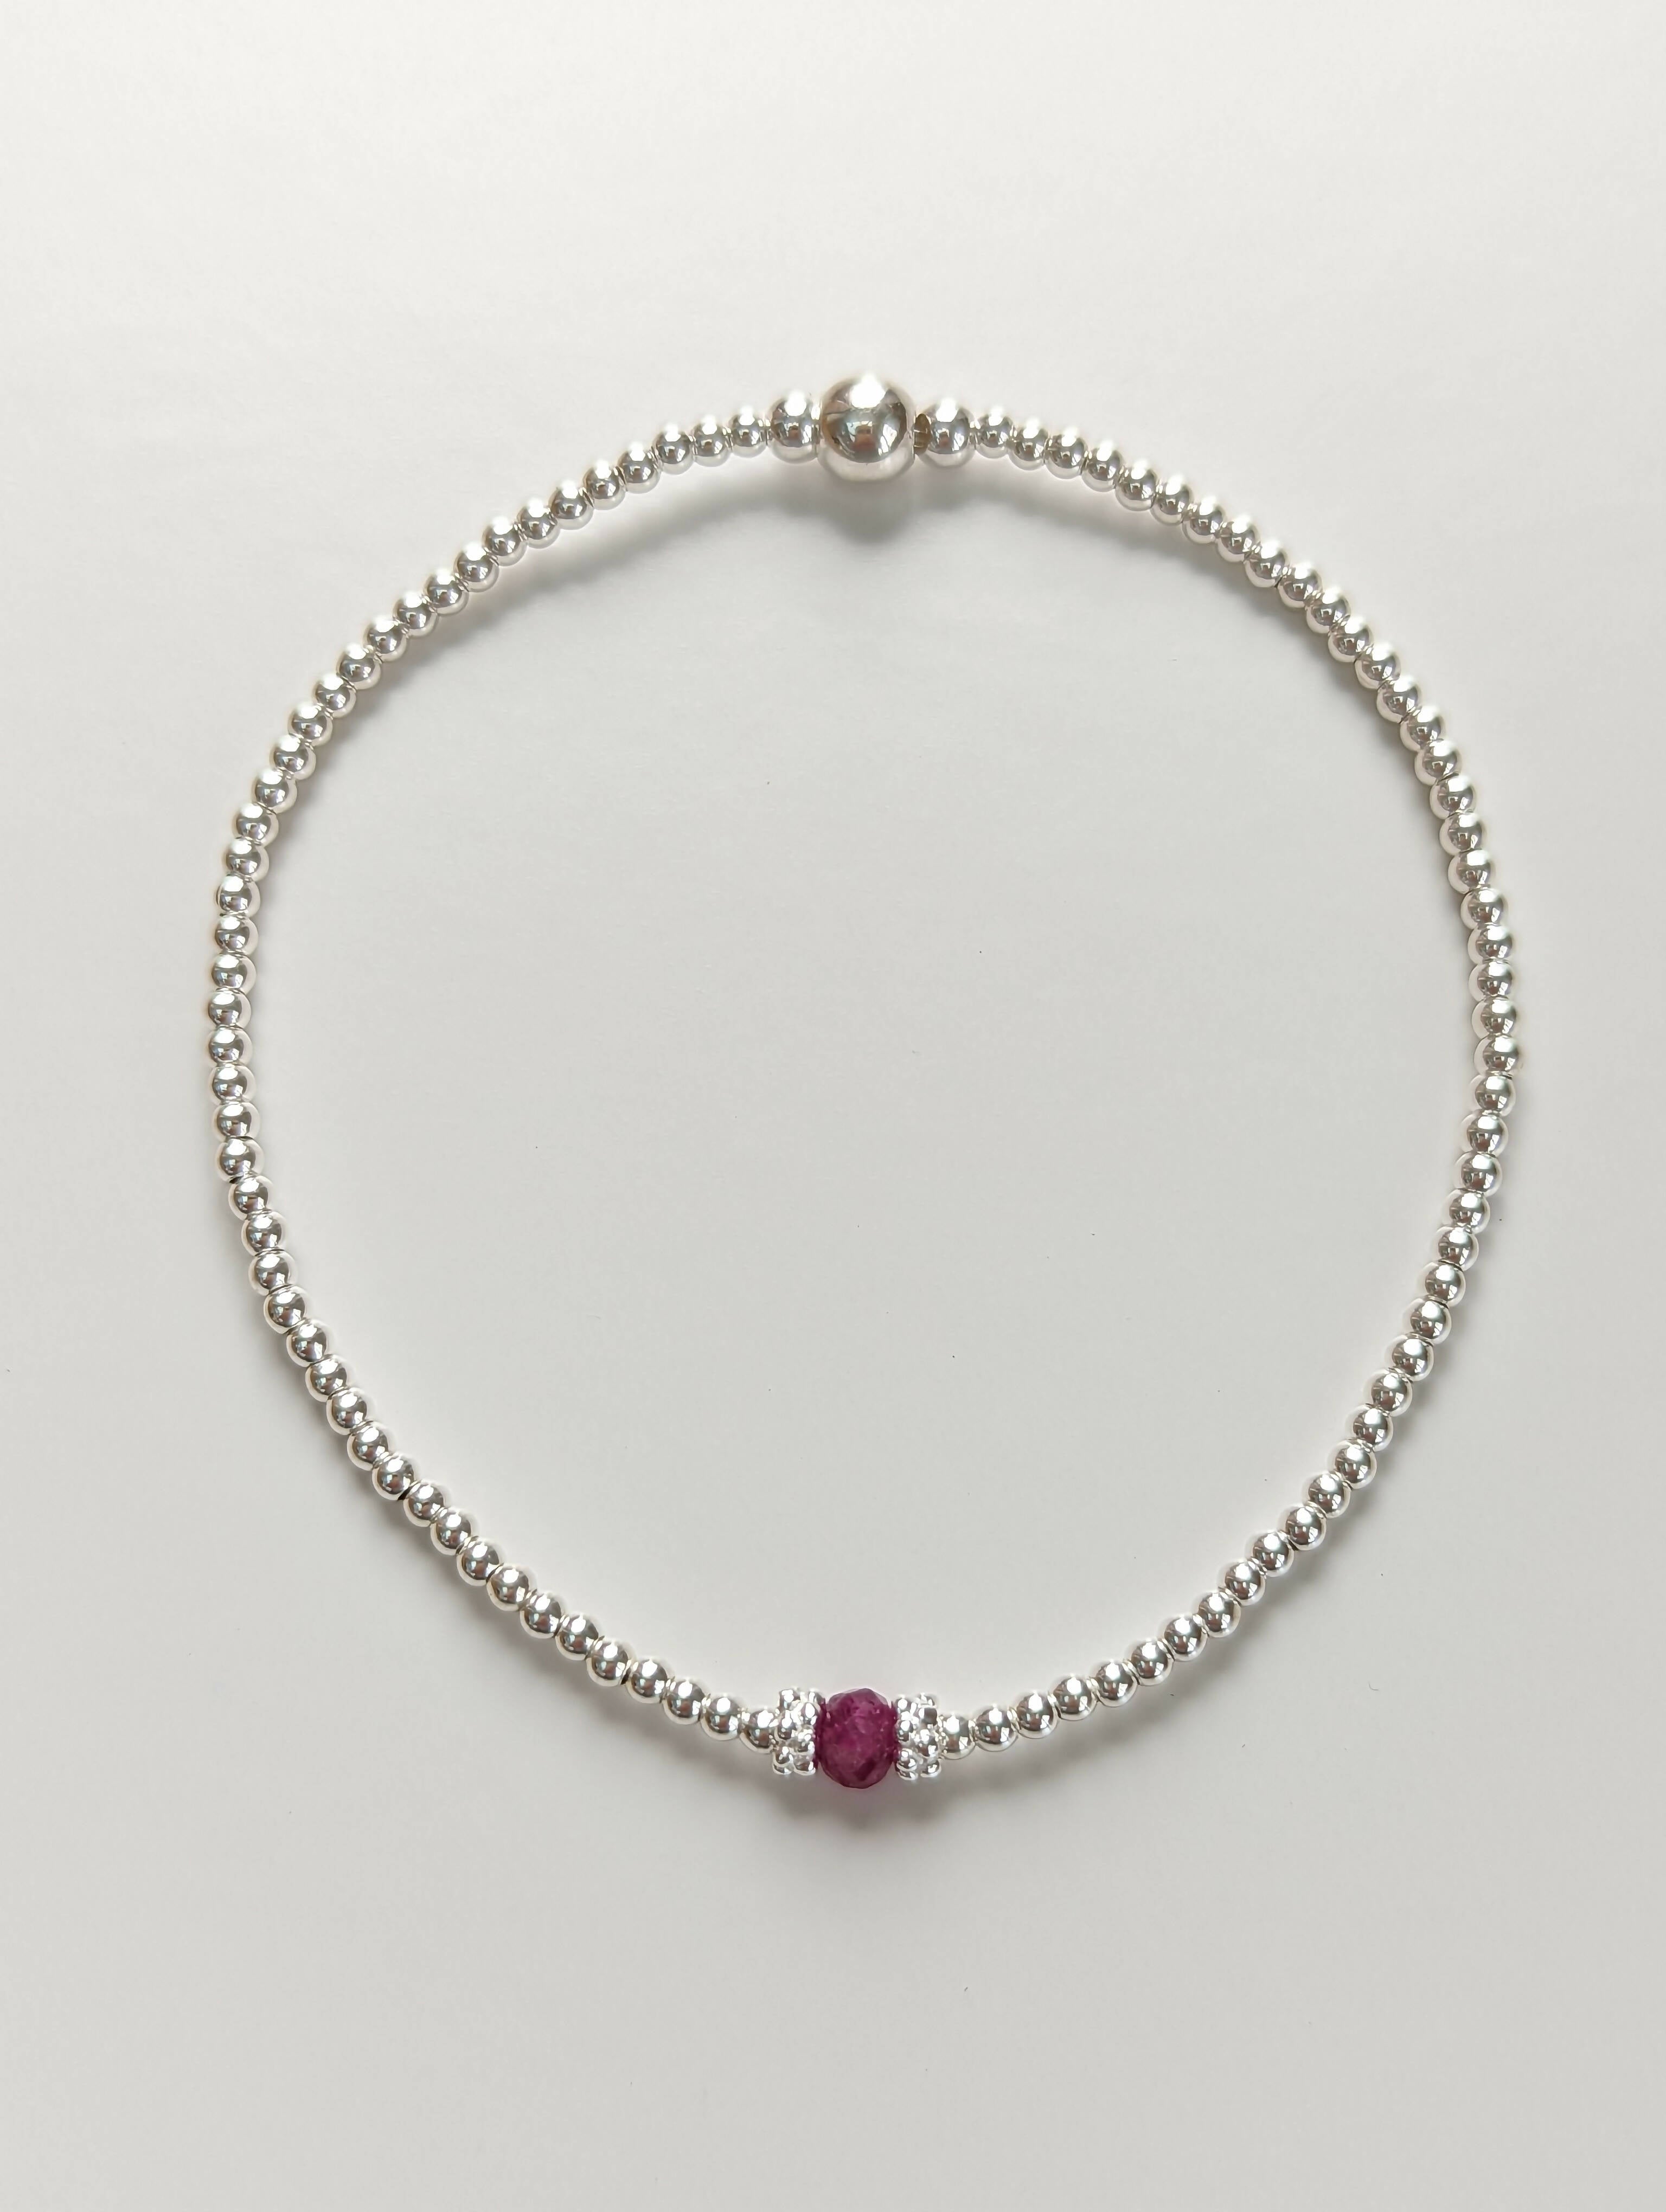 Ultra skinny single gemstone bead bracelet - Handmade